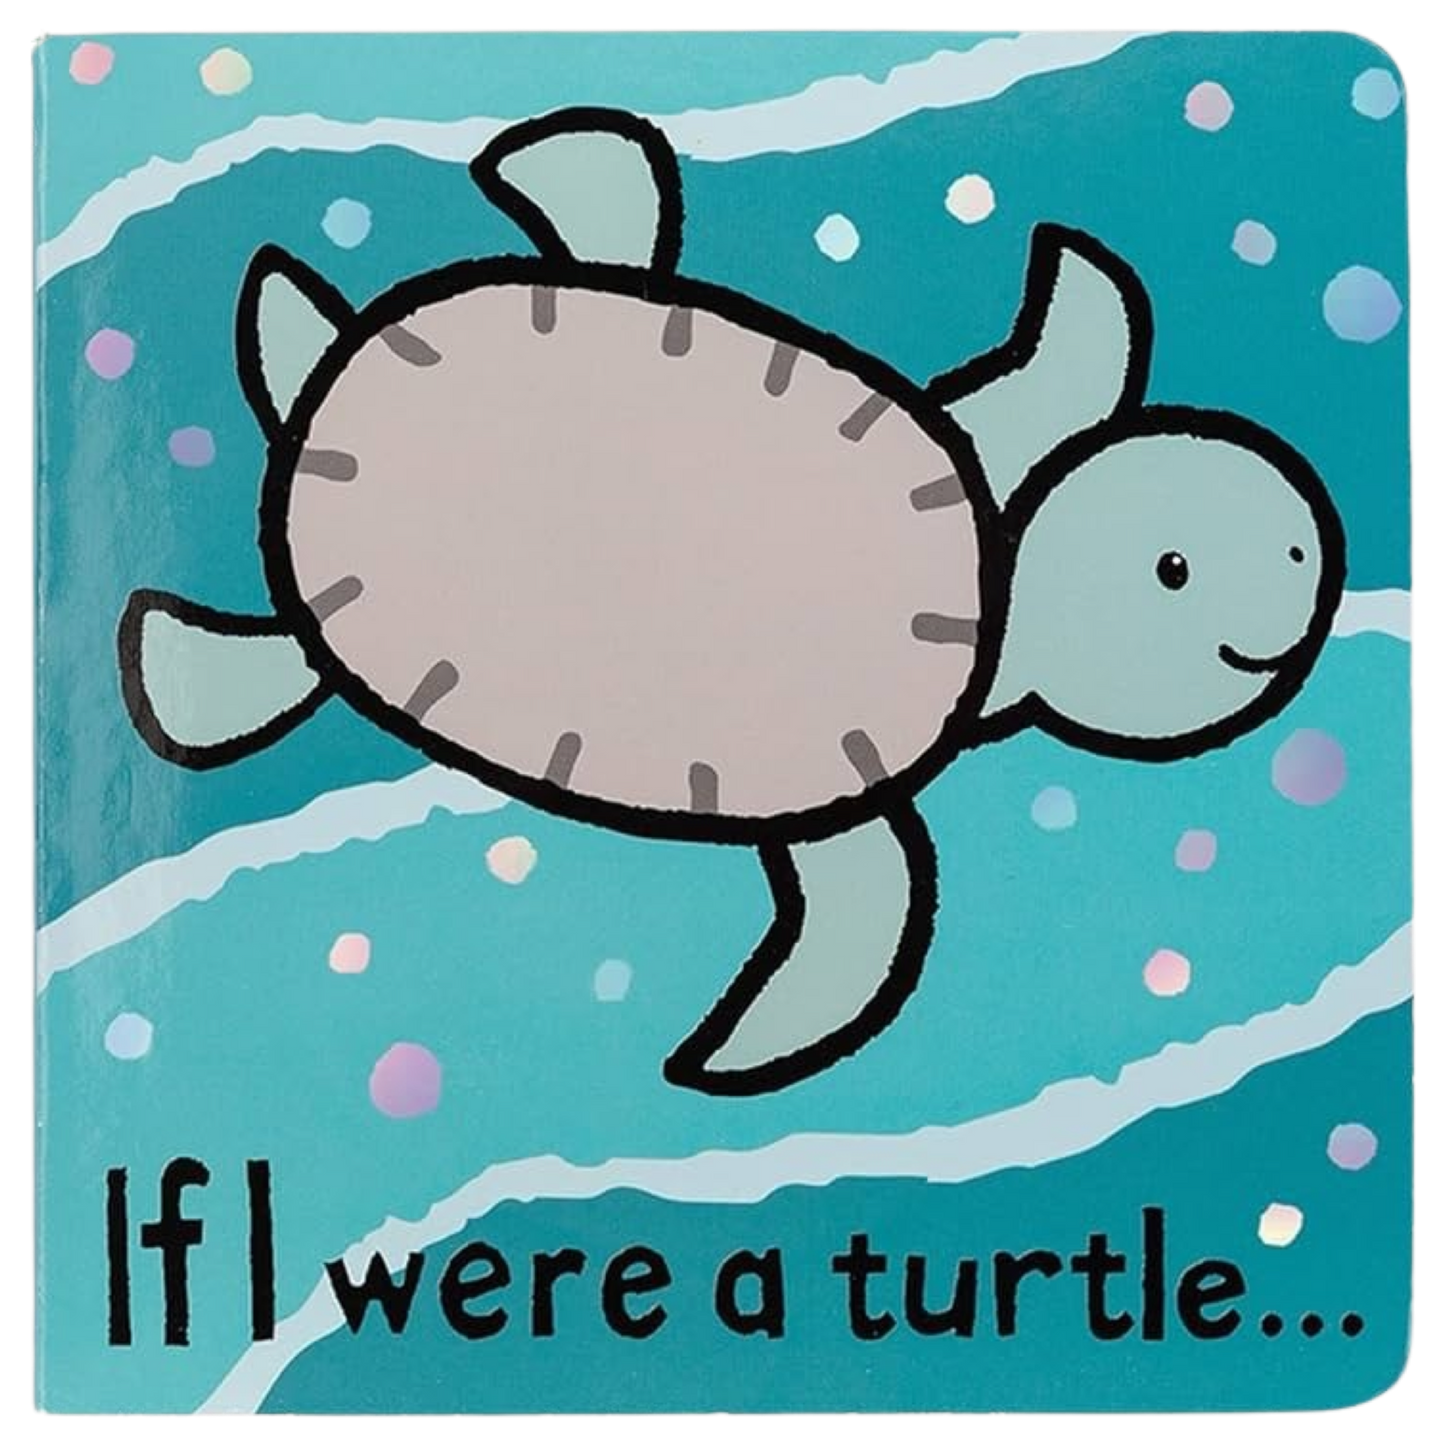 JC Book - If I were a Turtle